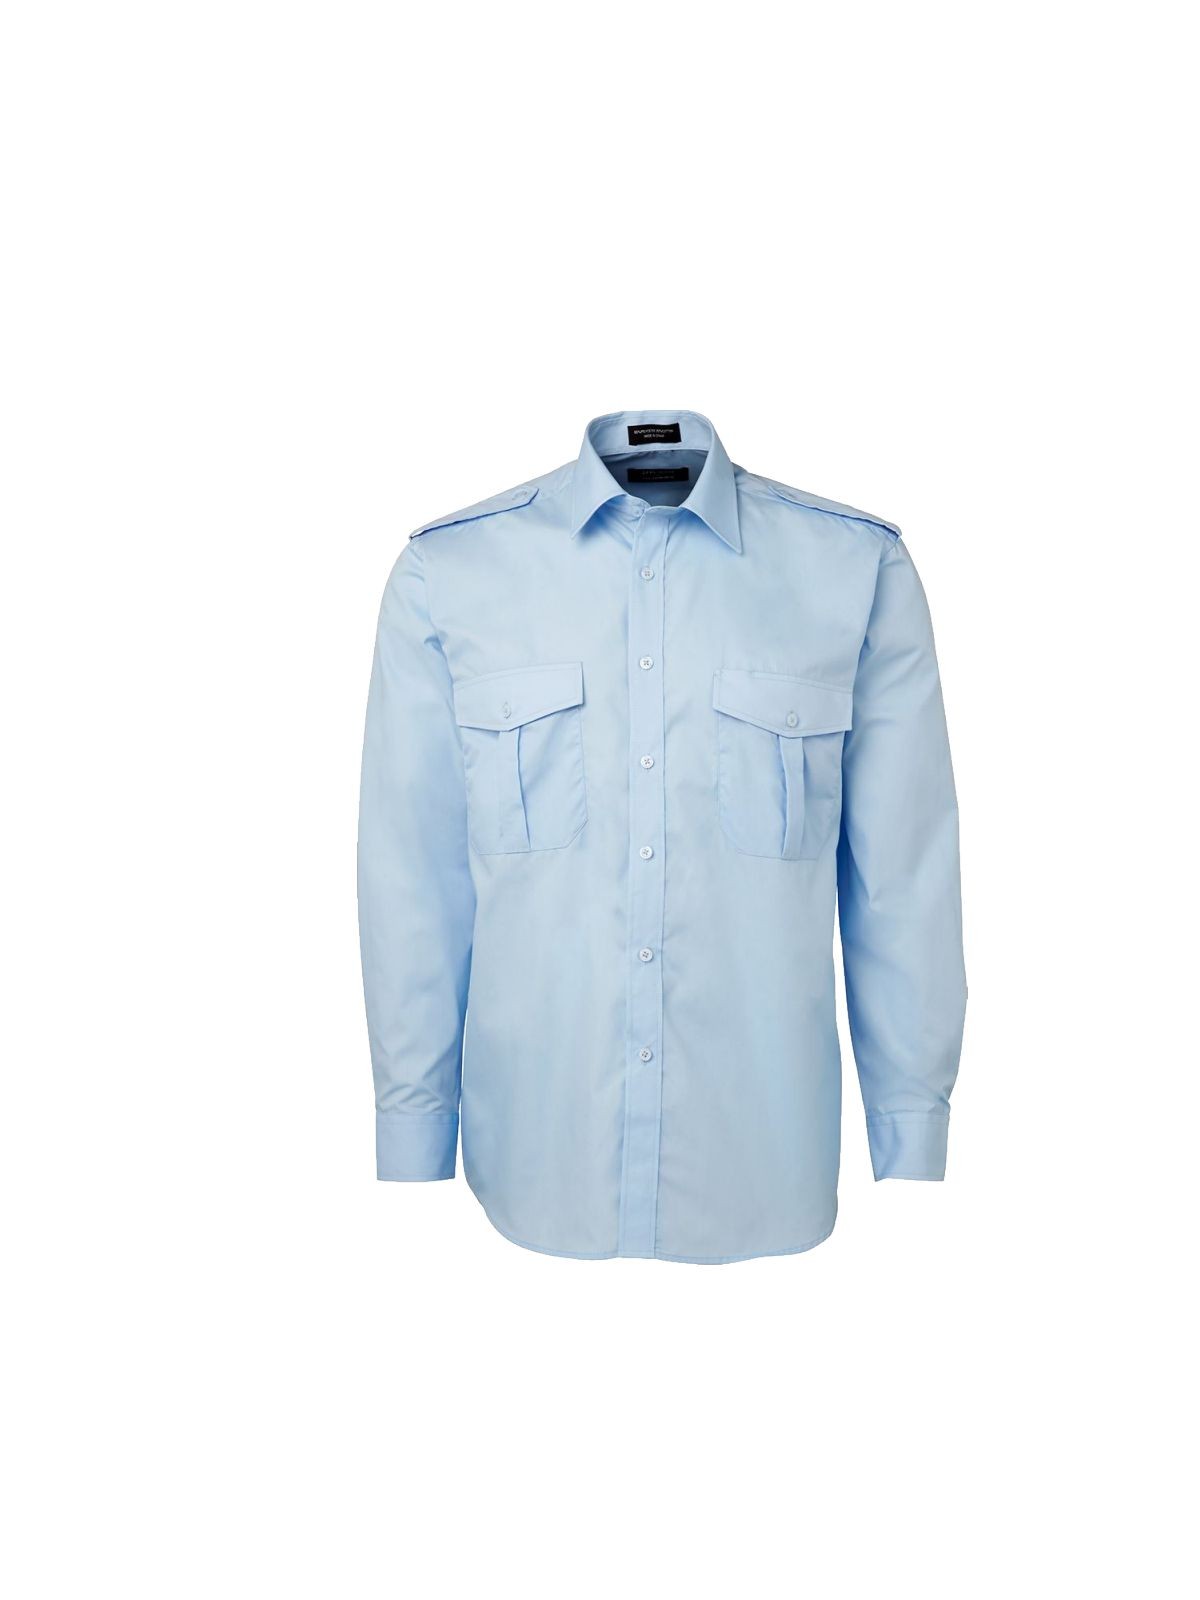 Buy Long Sleeve Epaulette Uniform Shirt in NZ | The Uniform Centre